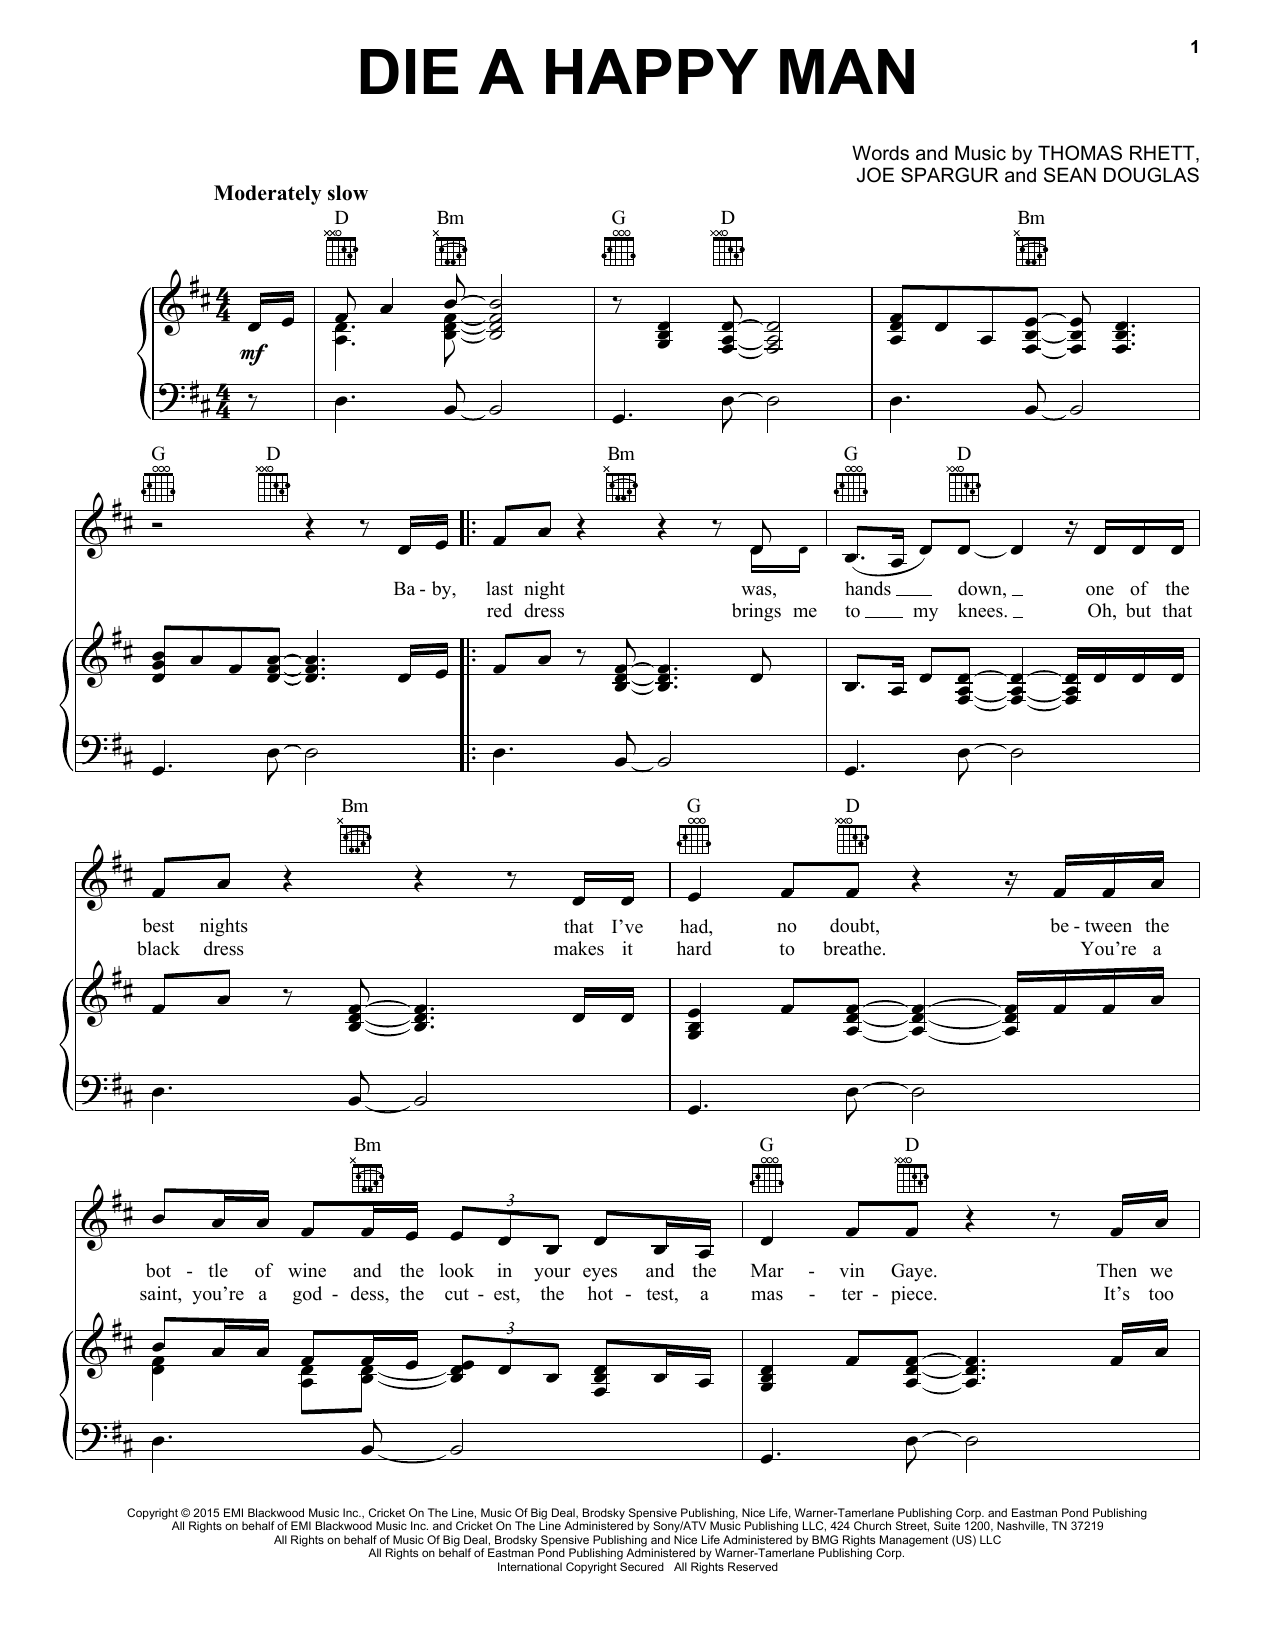 Thomas Rhett Die A Happy Man Sheet Music Notes & Chords for Easy Piano - Download or Print PDF